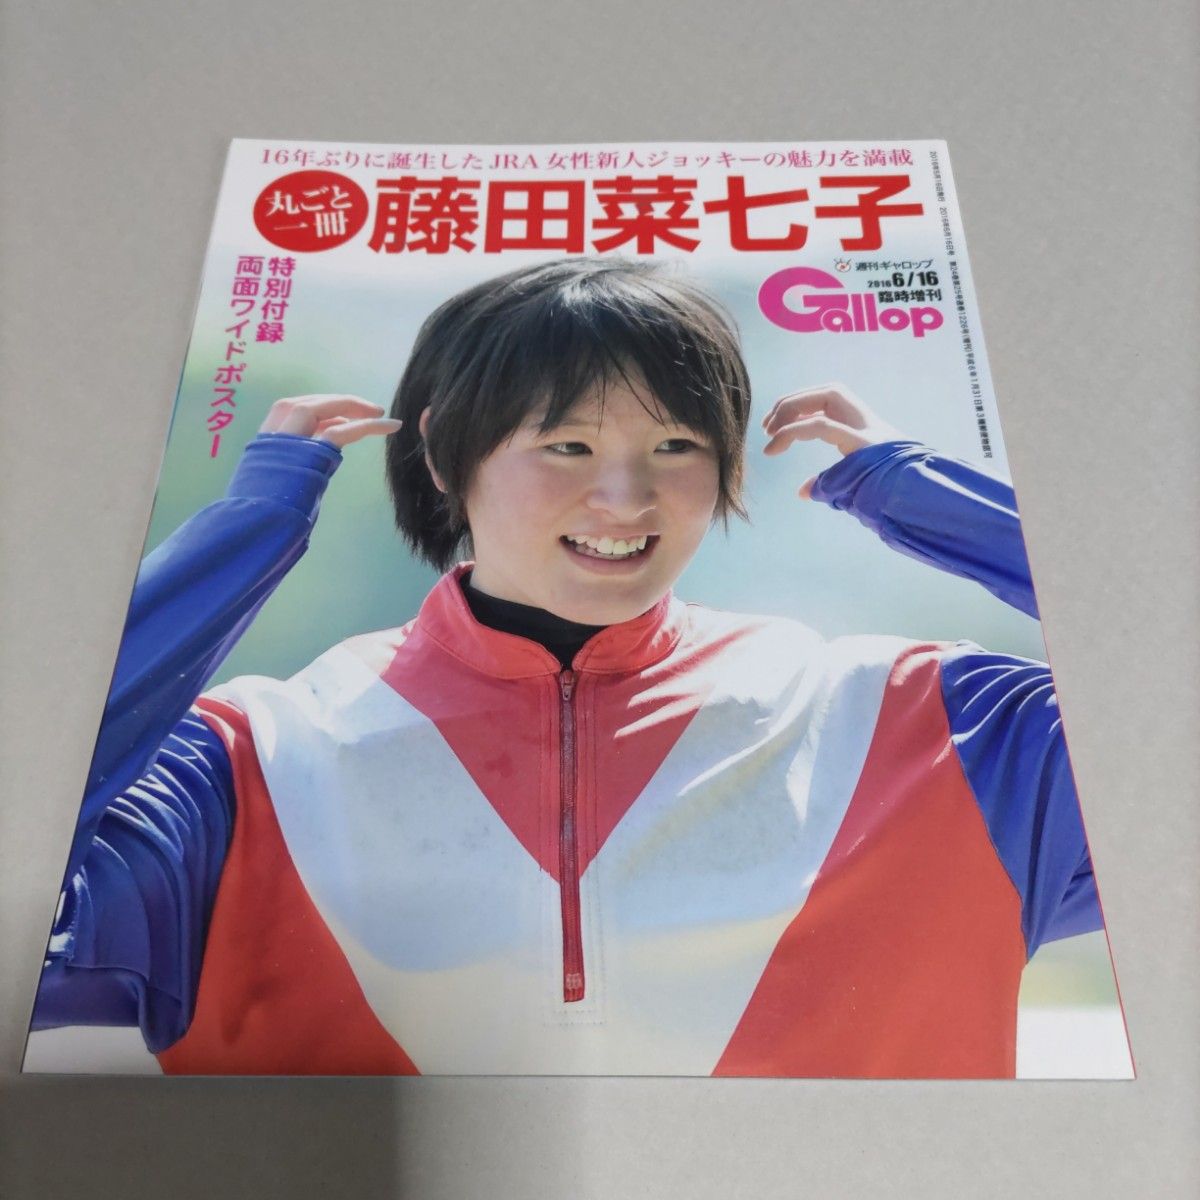 藤田菜七子 騎手 JRA 週刊Gallop臨時増刊 丸ごと一冊 女性騎手 競馬